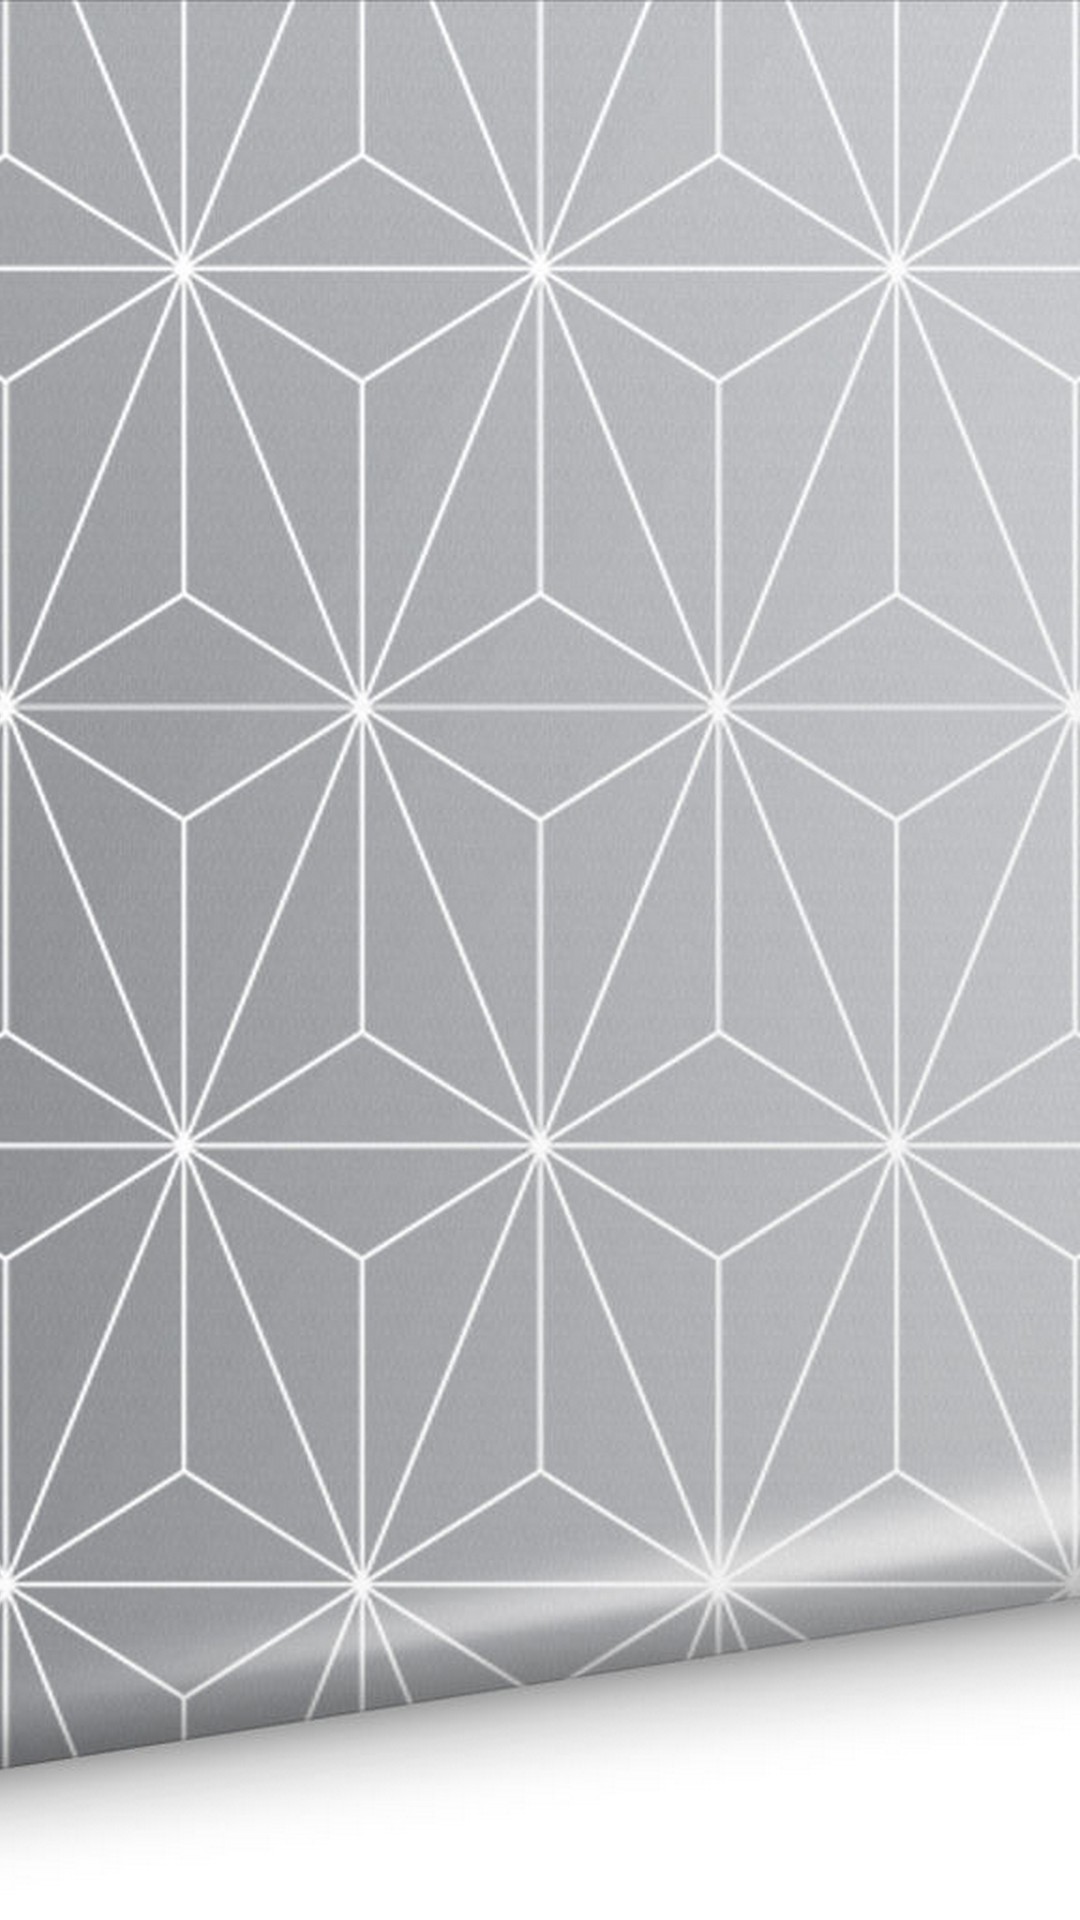 iPhone X Wallpaper Grey resolution 1080x1920